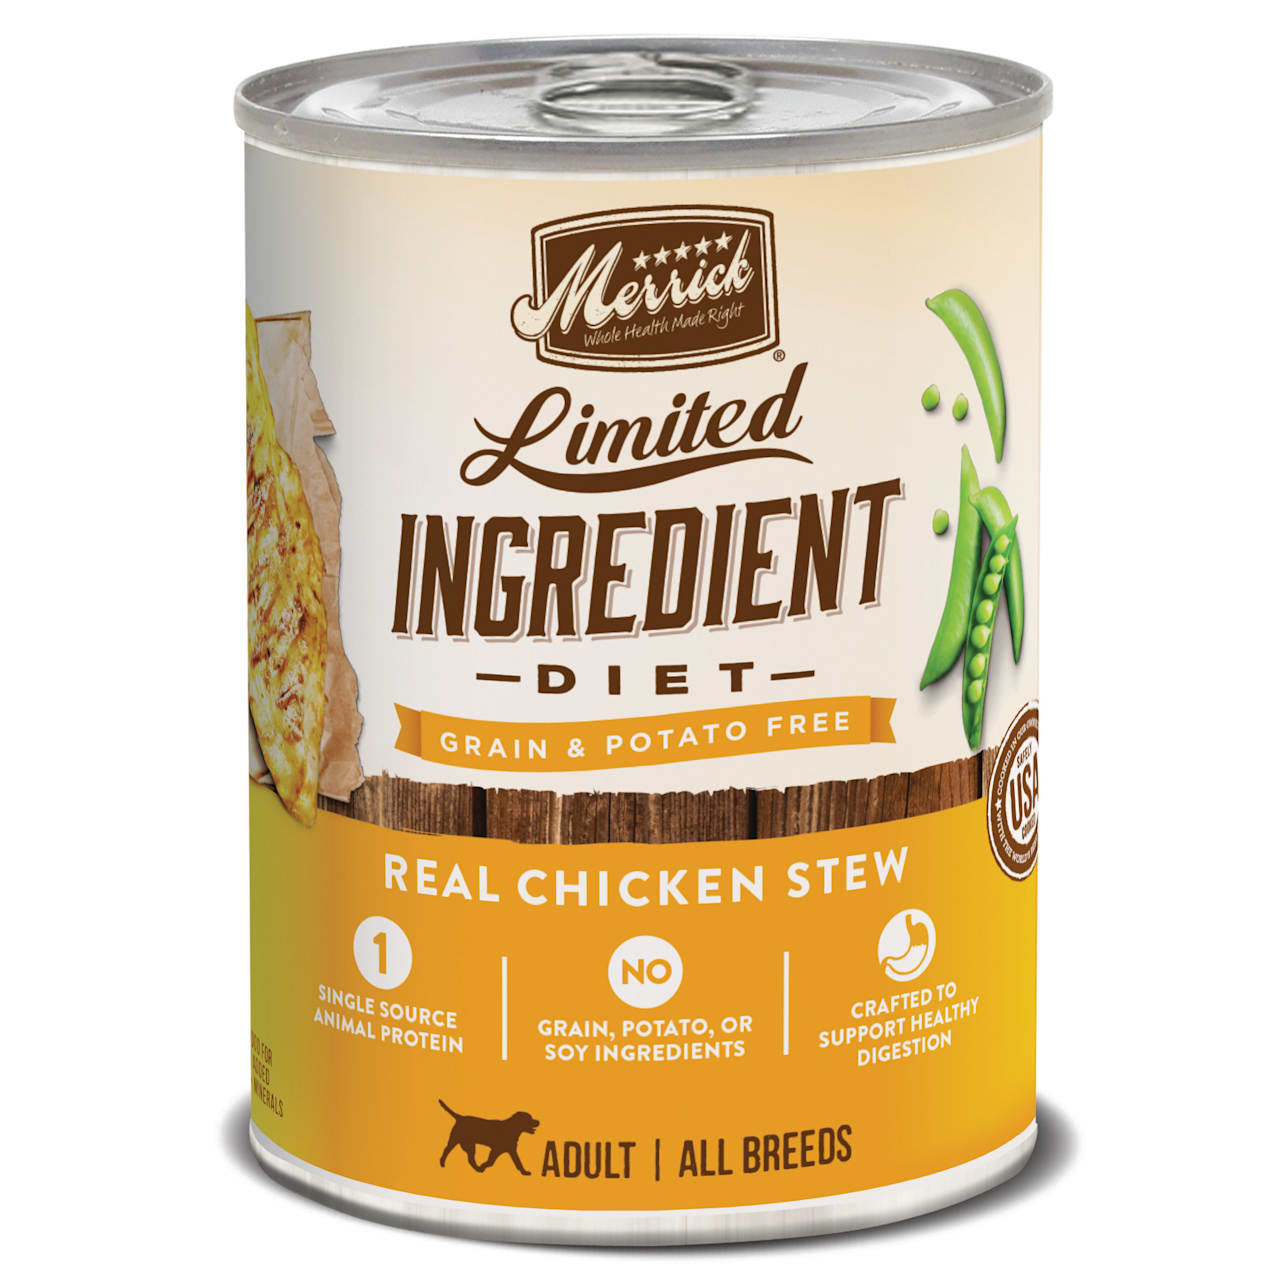 Merrick Limited Ingredient Diet Grain Free Real Chicken